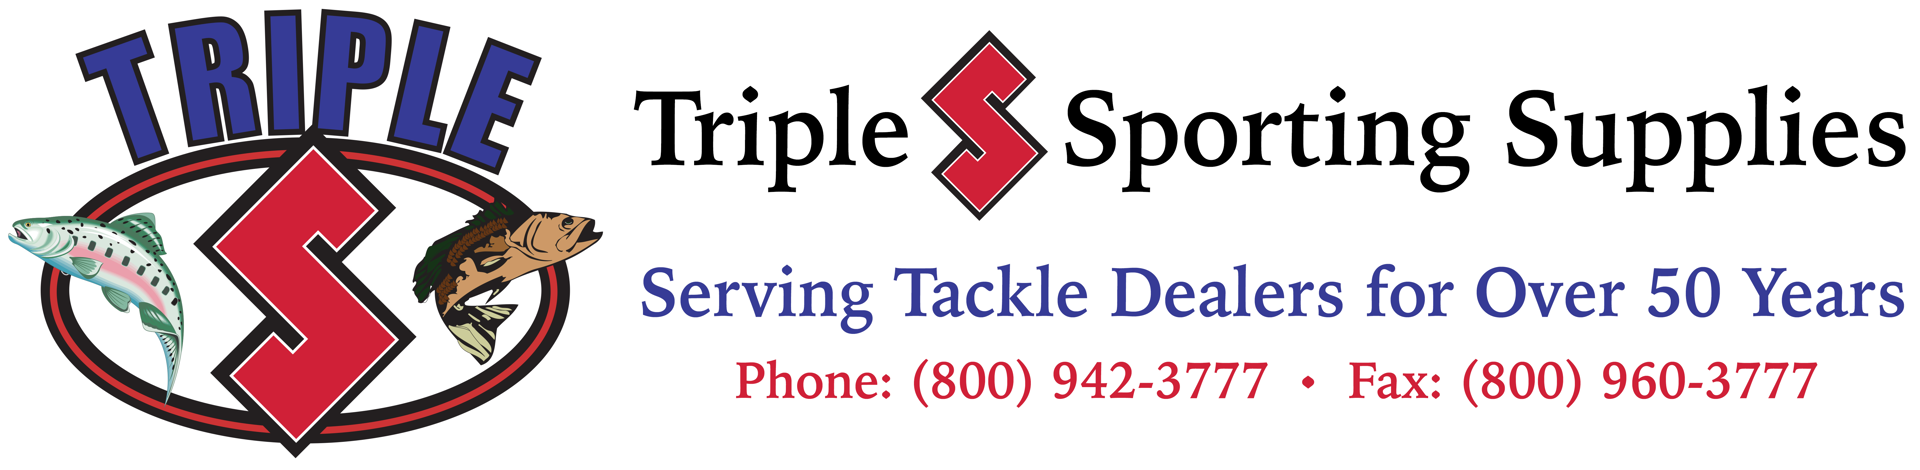 Triple S Sporting Supplies. Trilene XL